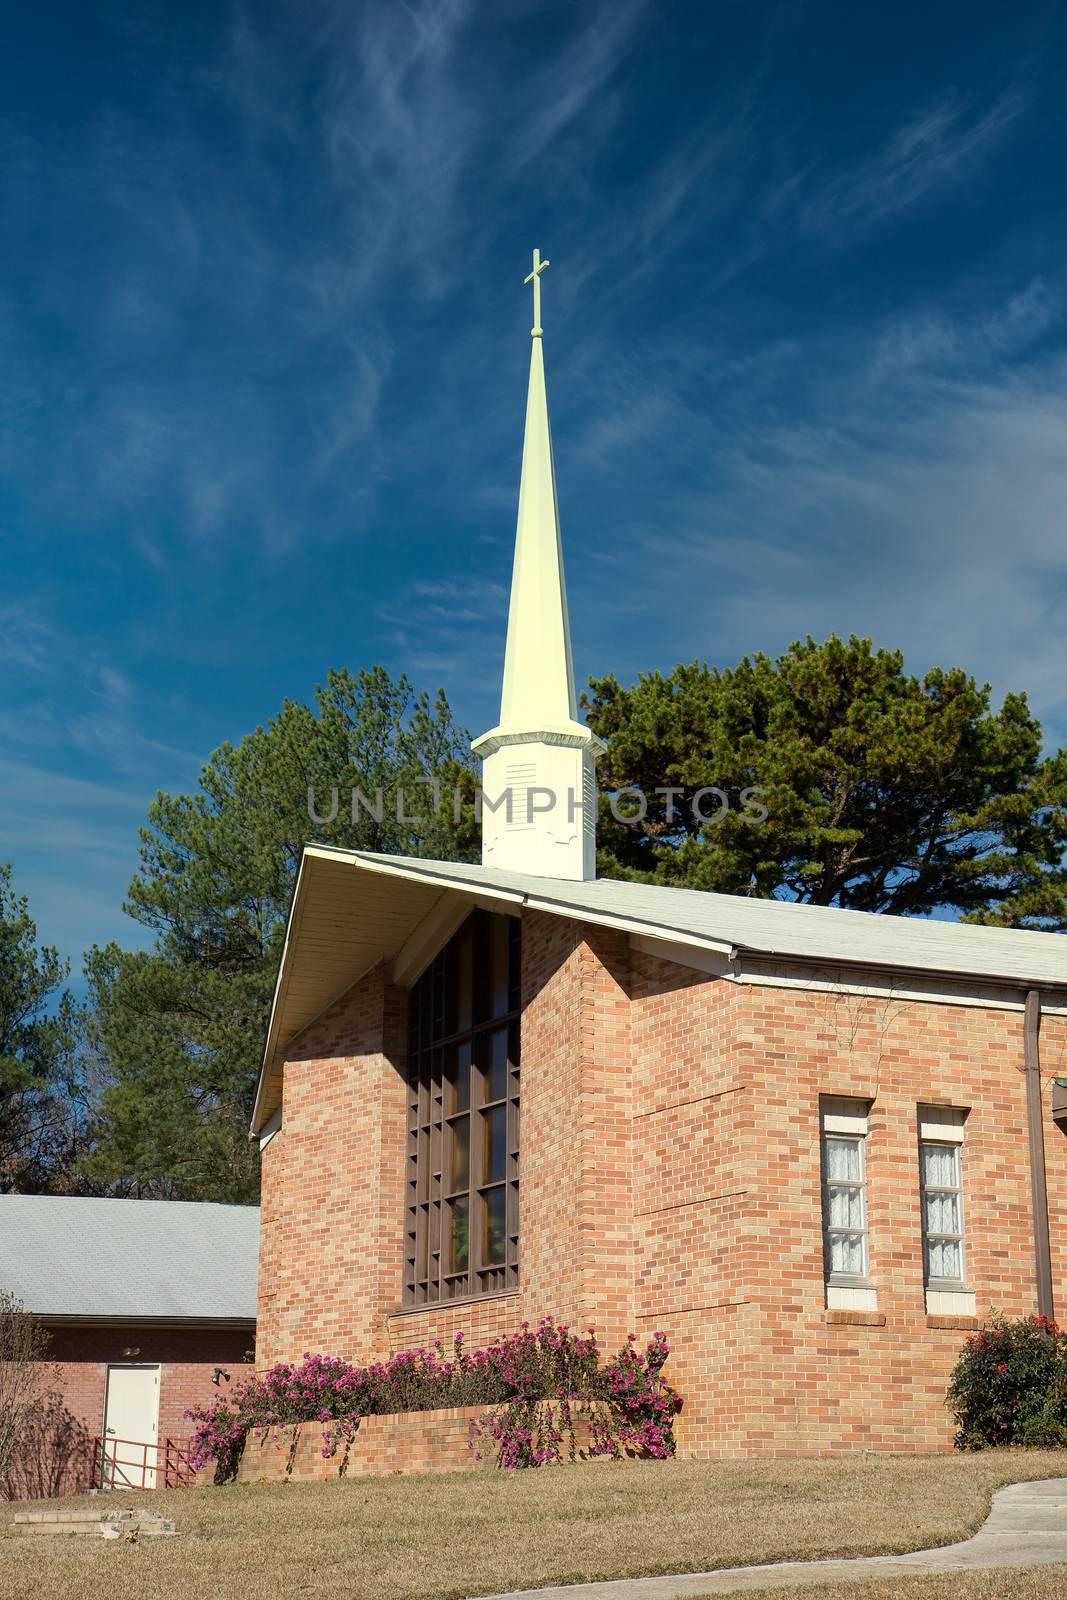 A small brick church and steeple against a blue sky